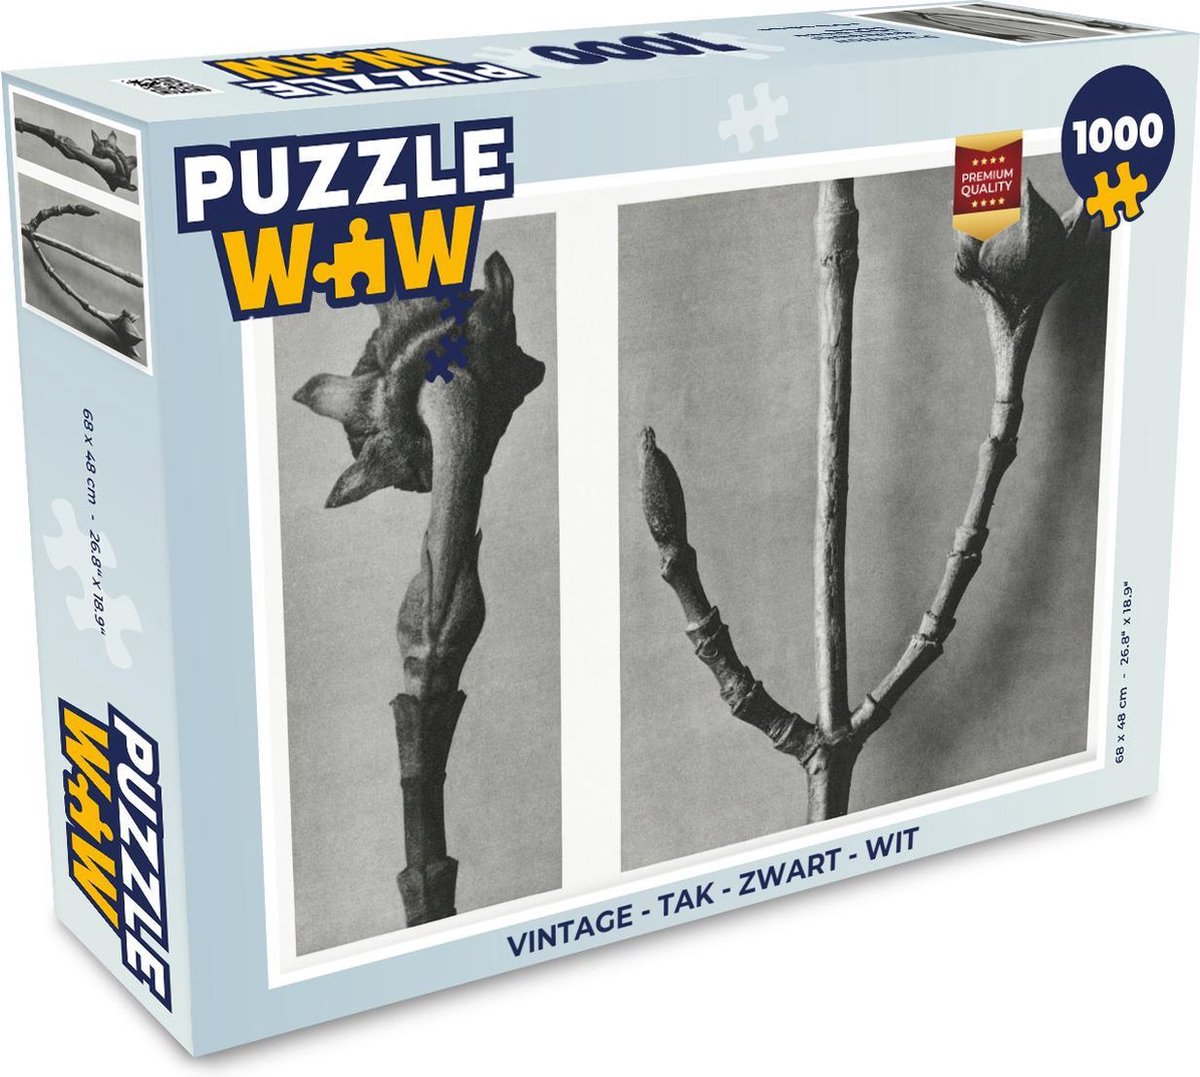 Afbeelding van product PuzzleWow  Puzzel Vintage - Tak - Zwart - Wit - Legpuzzel - Puzzel 1000 stukjes volwassenen